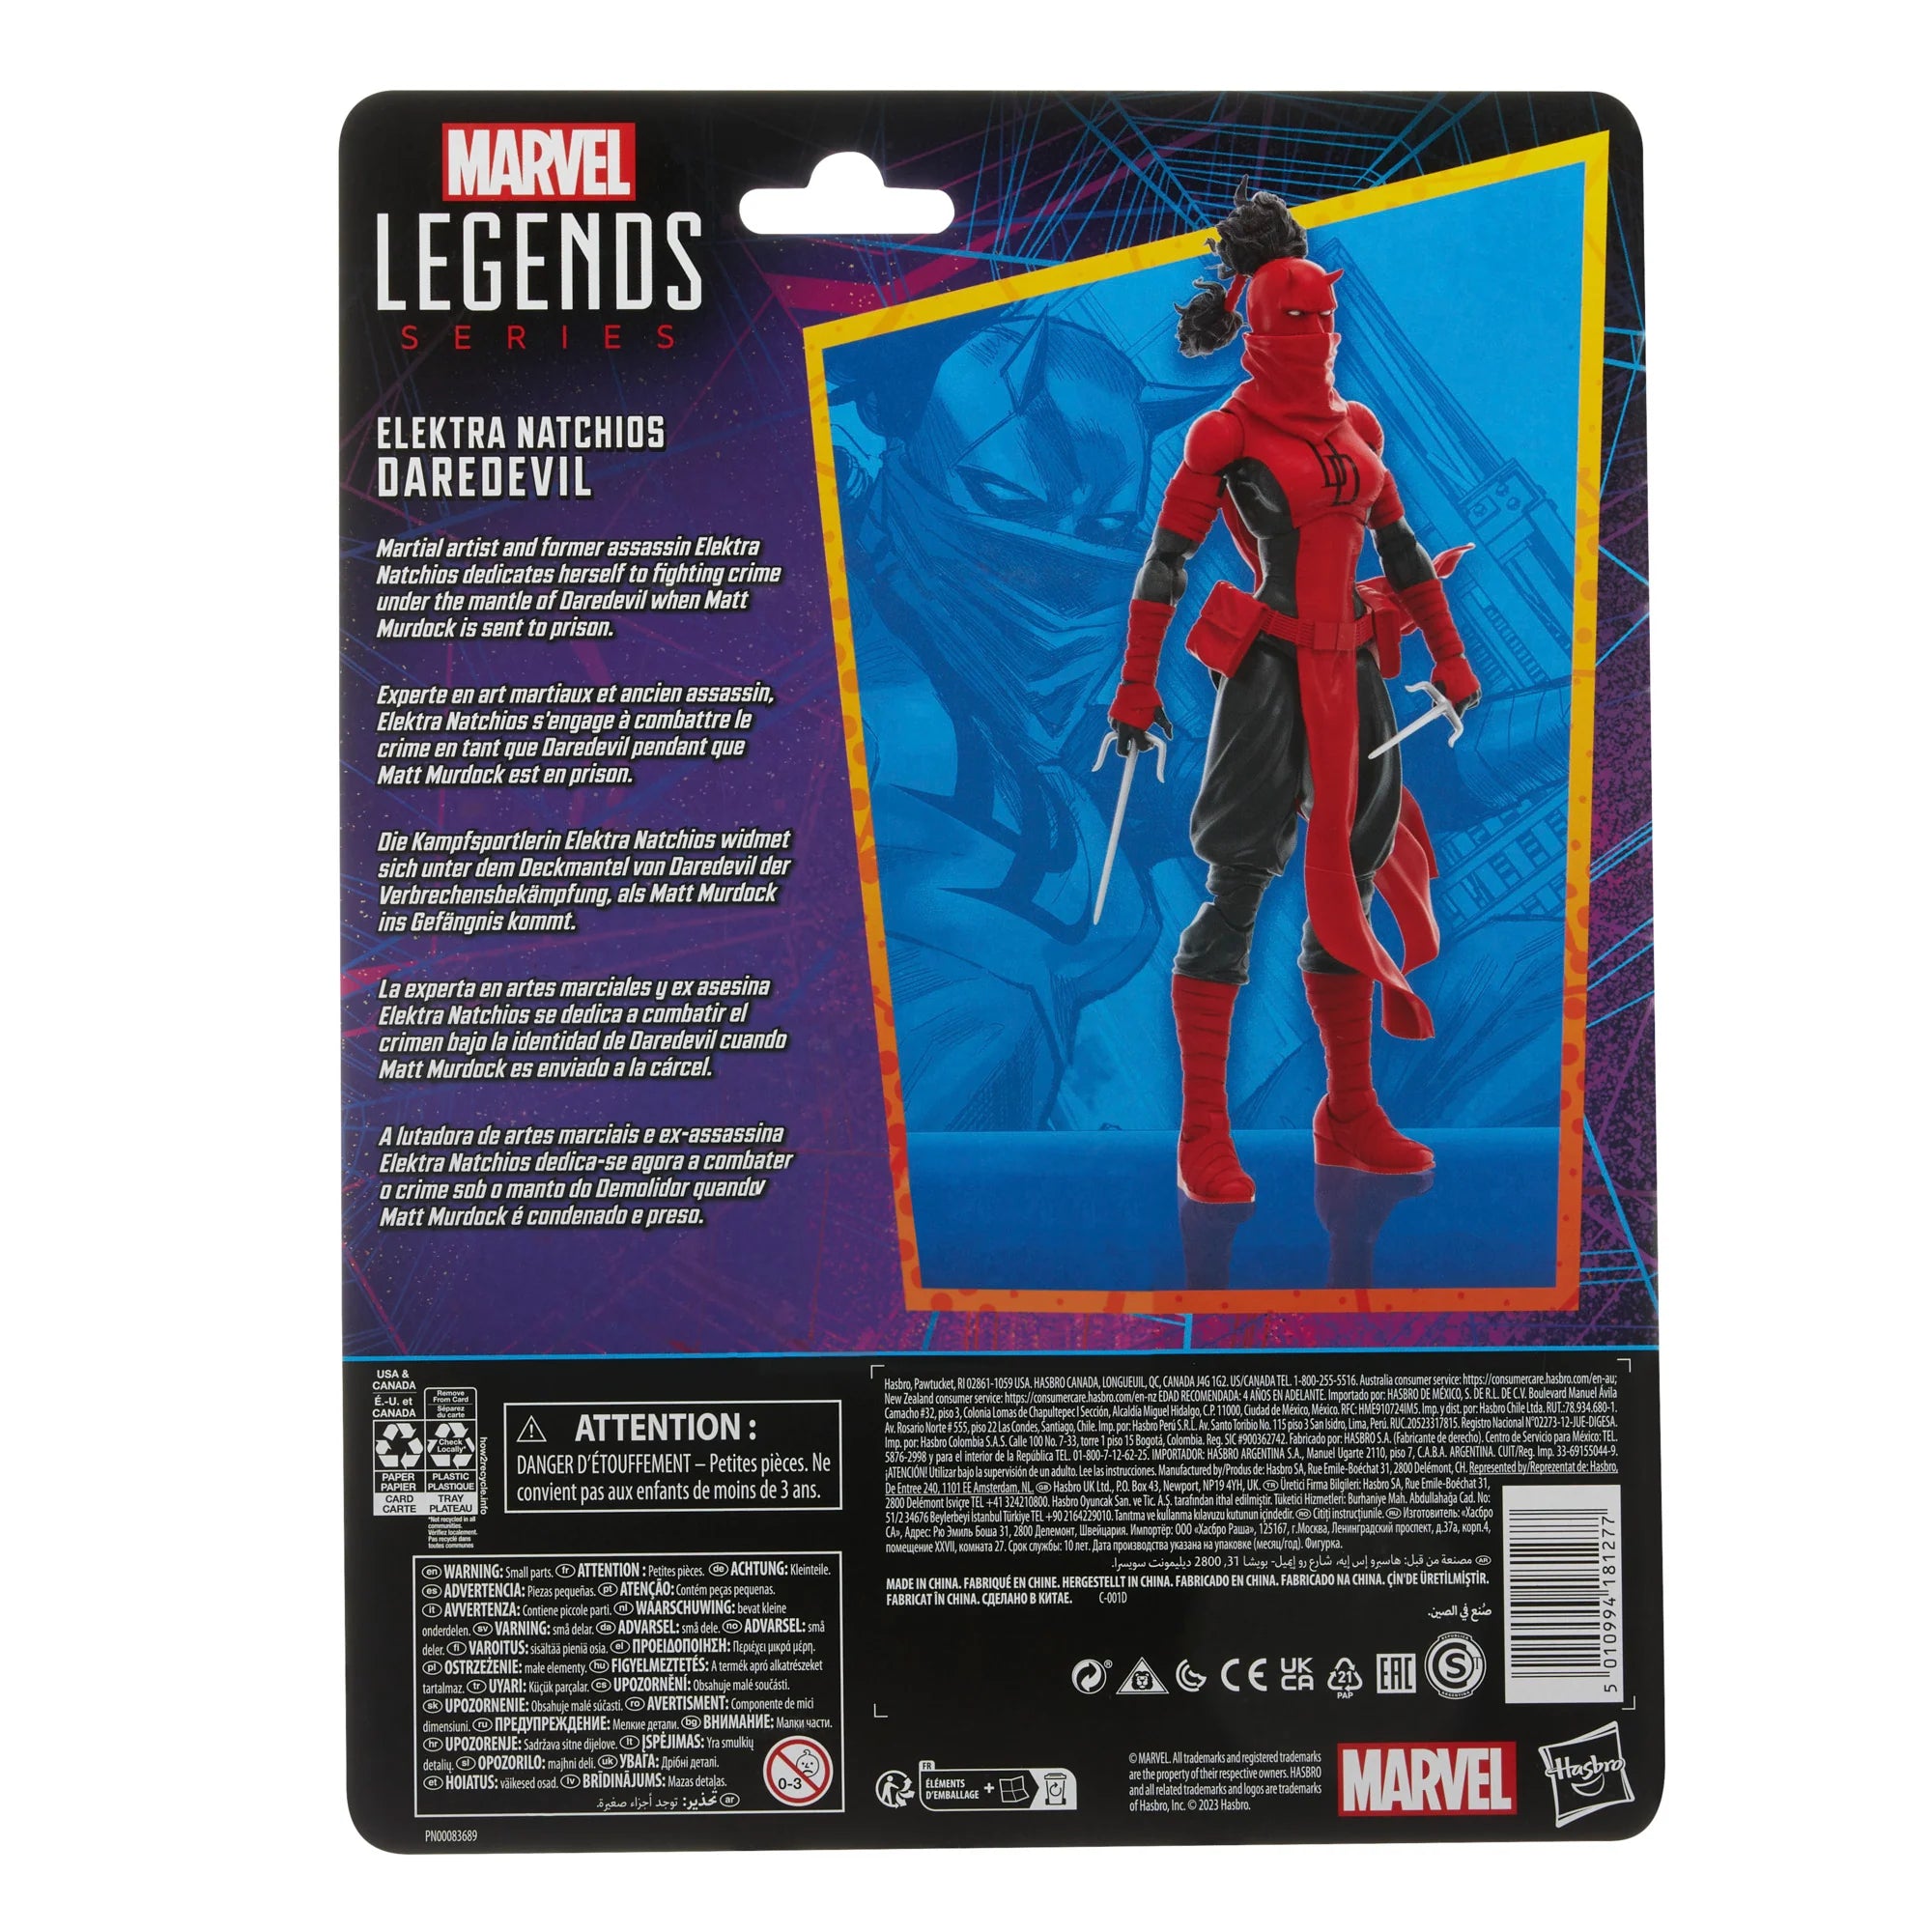 Marvel Legends Classic: Spiderman - Elektra Natchios Daredevil